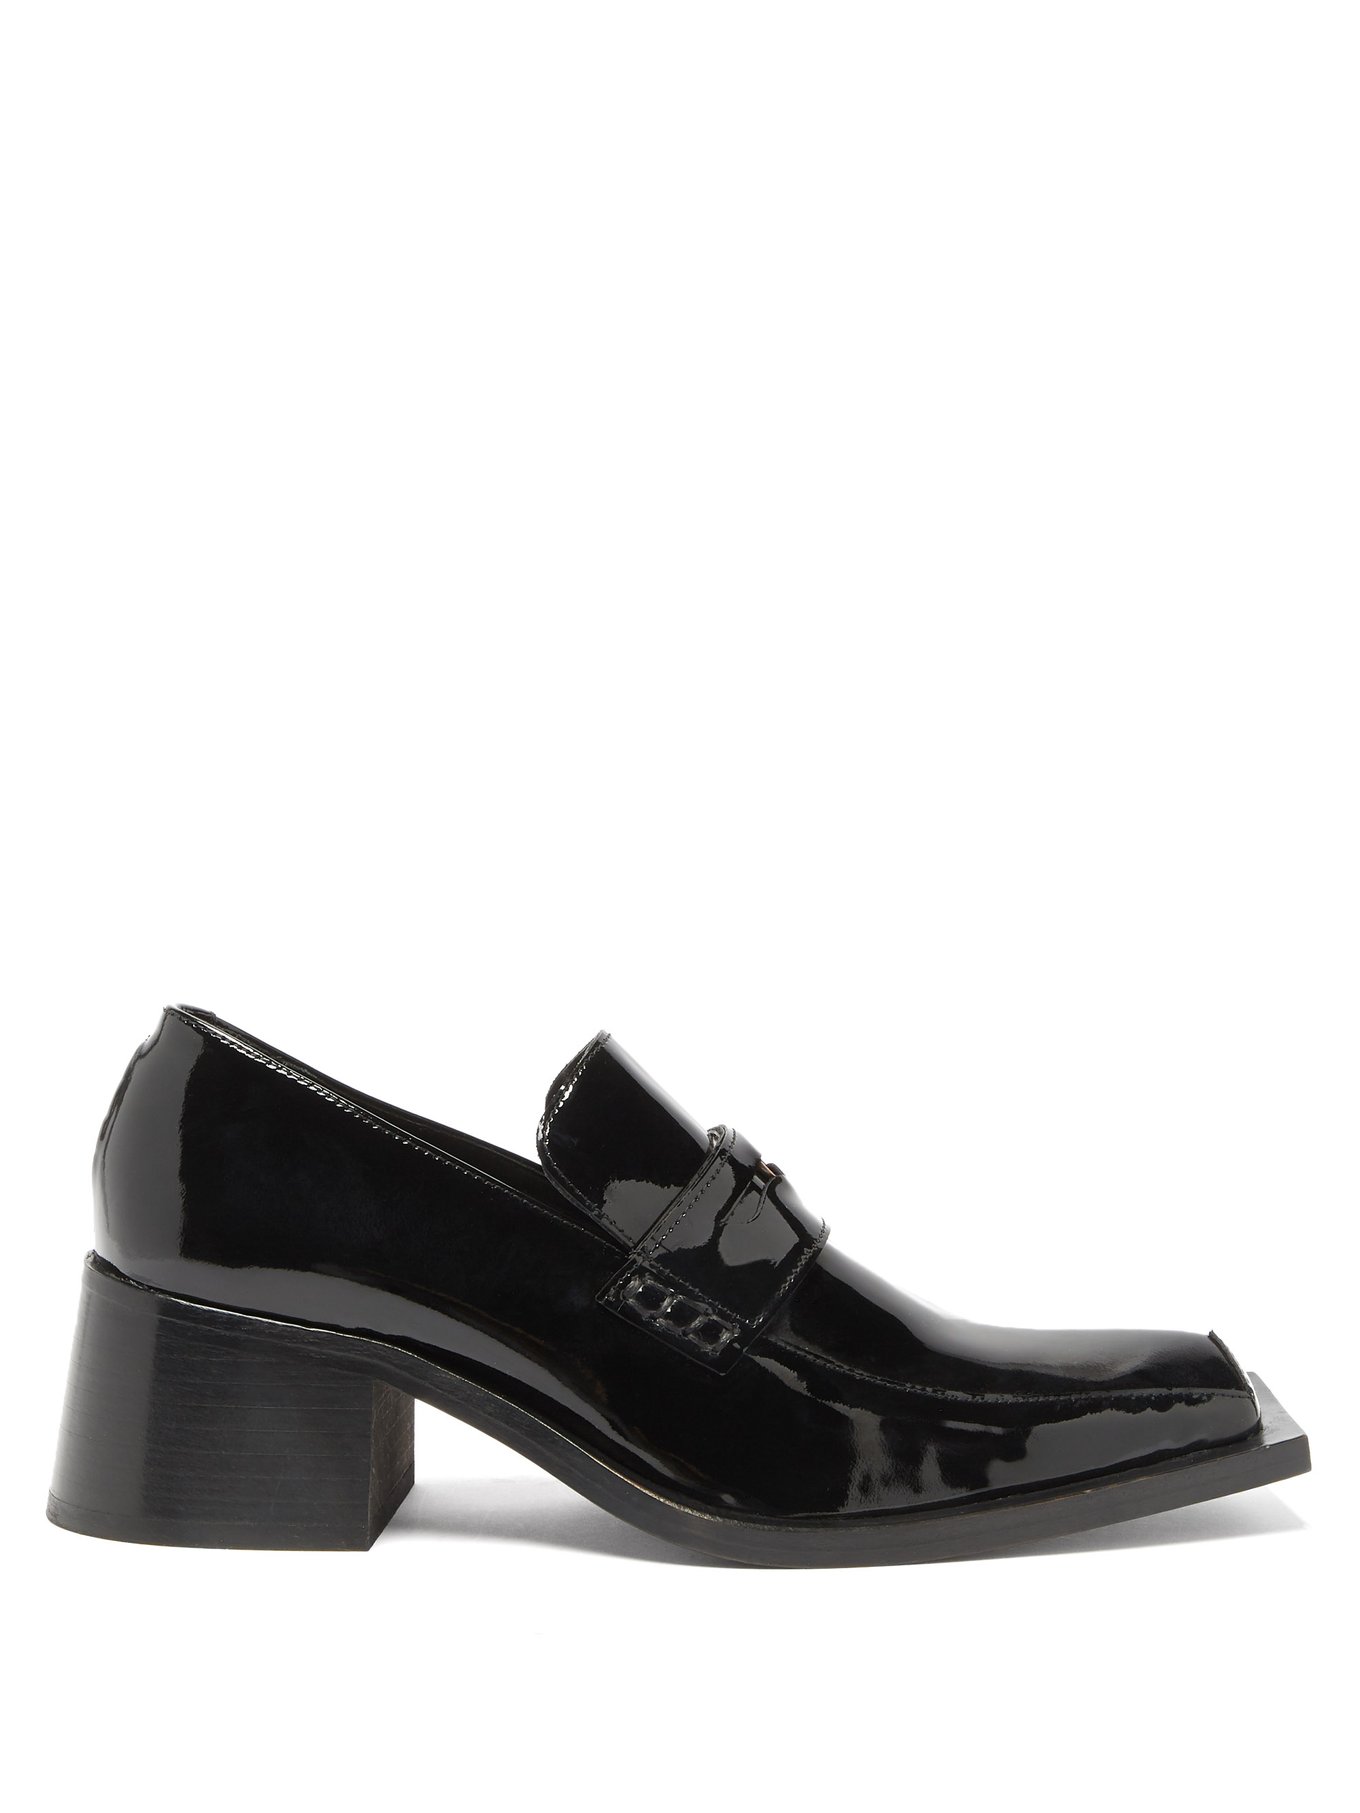 Black Bagleys square-toe patent-leather loafers | Martine Rose | UK